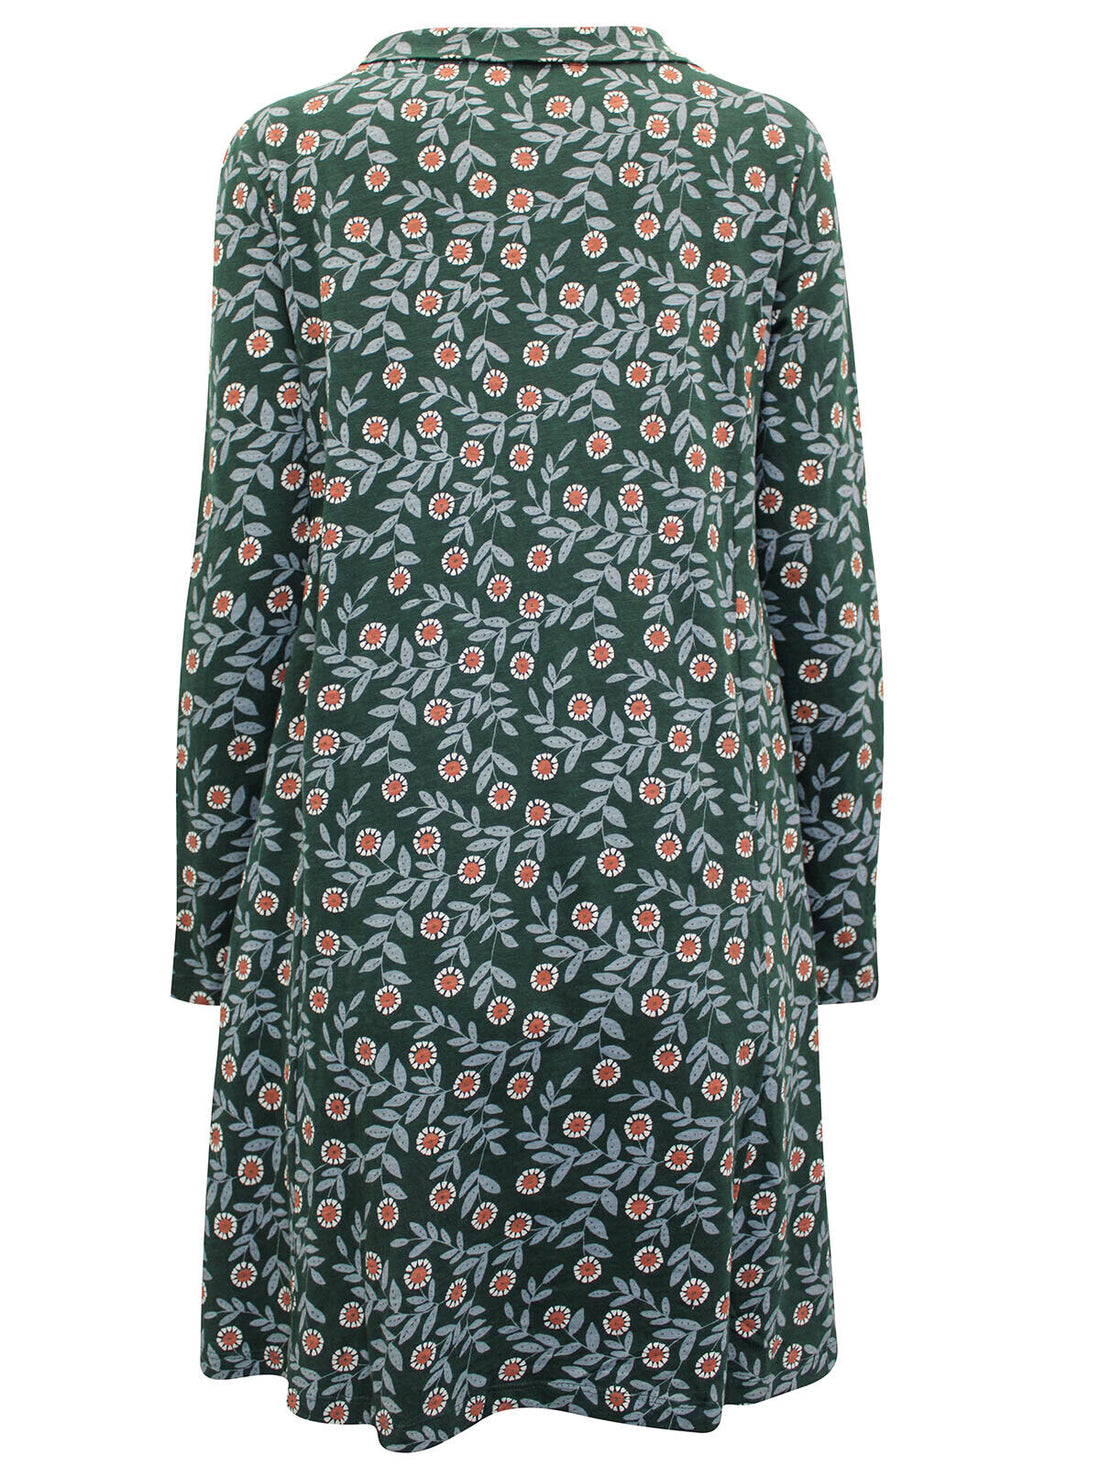 EX Seasalt Green Sea Oak Foliage Bloom Tehid Pockets Dress 12 14 16 20 RRP £55